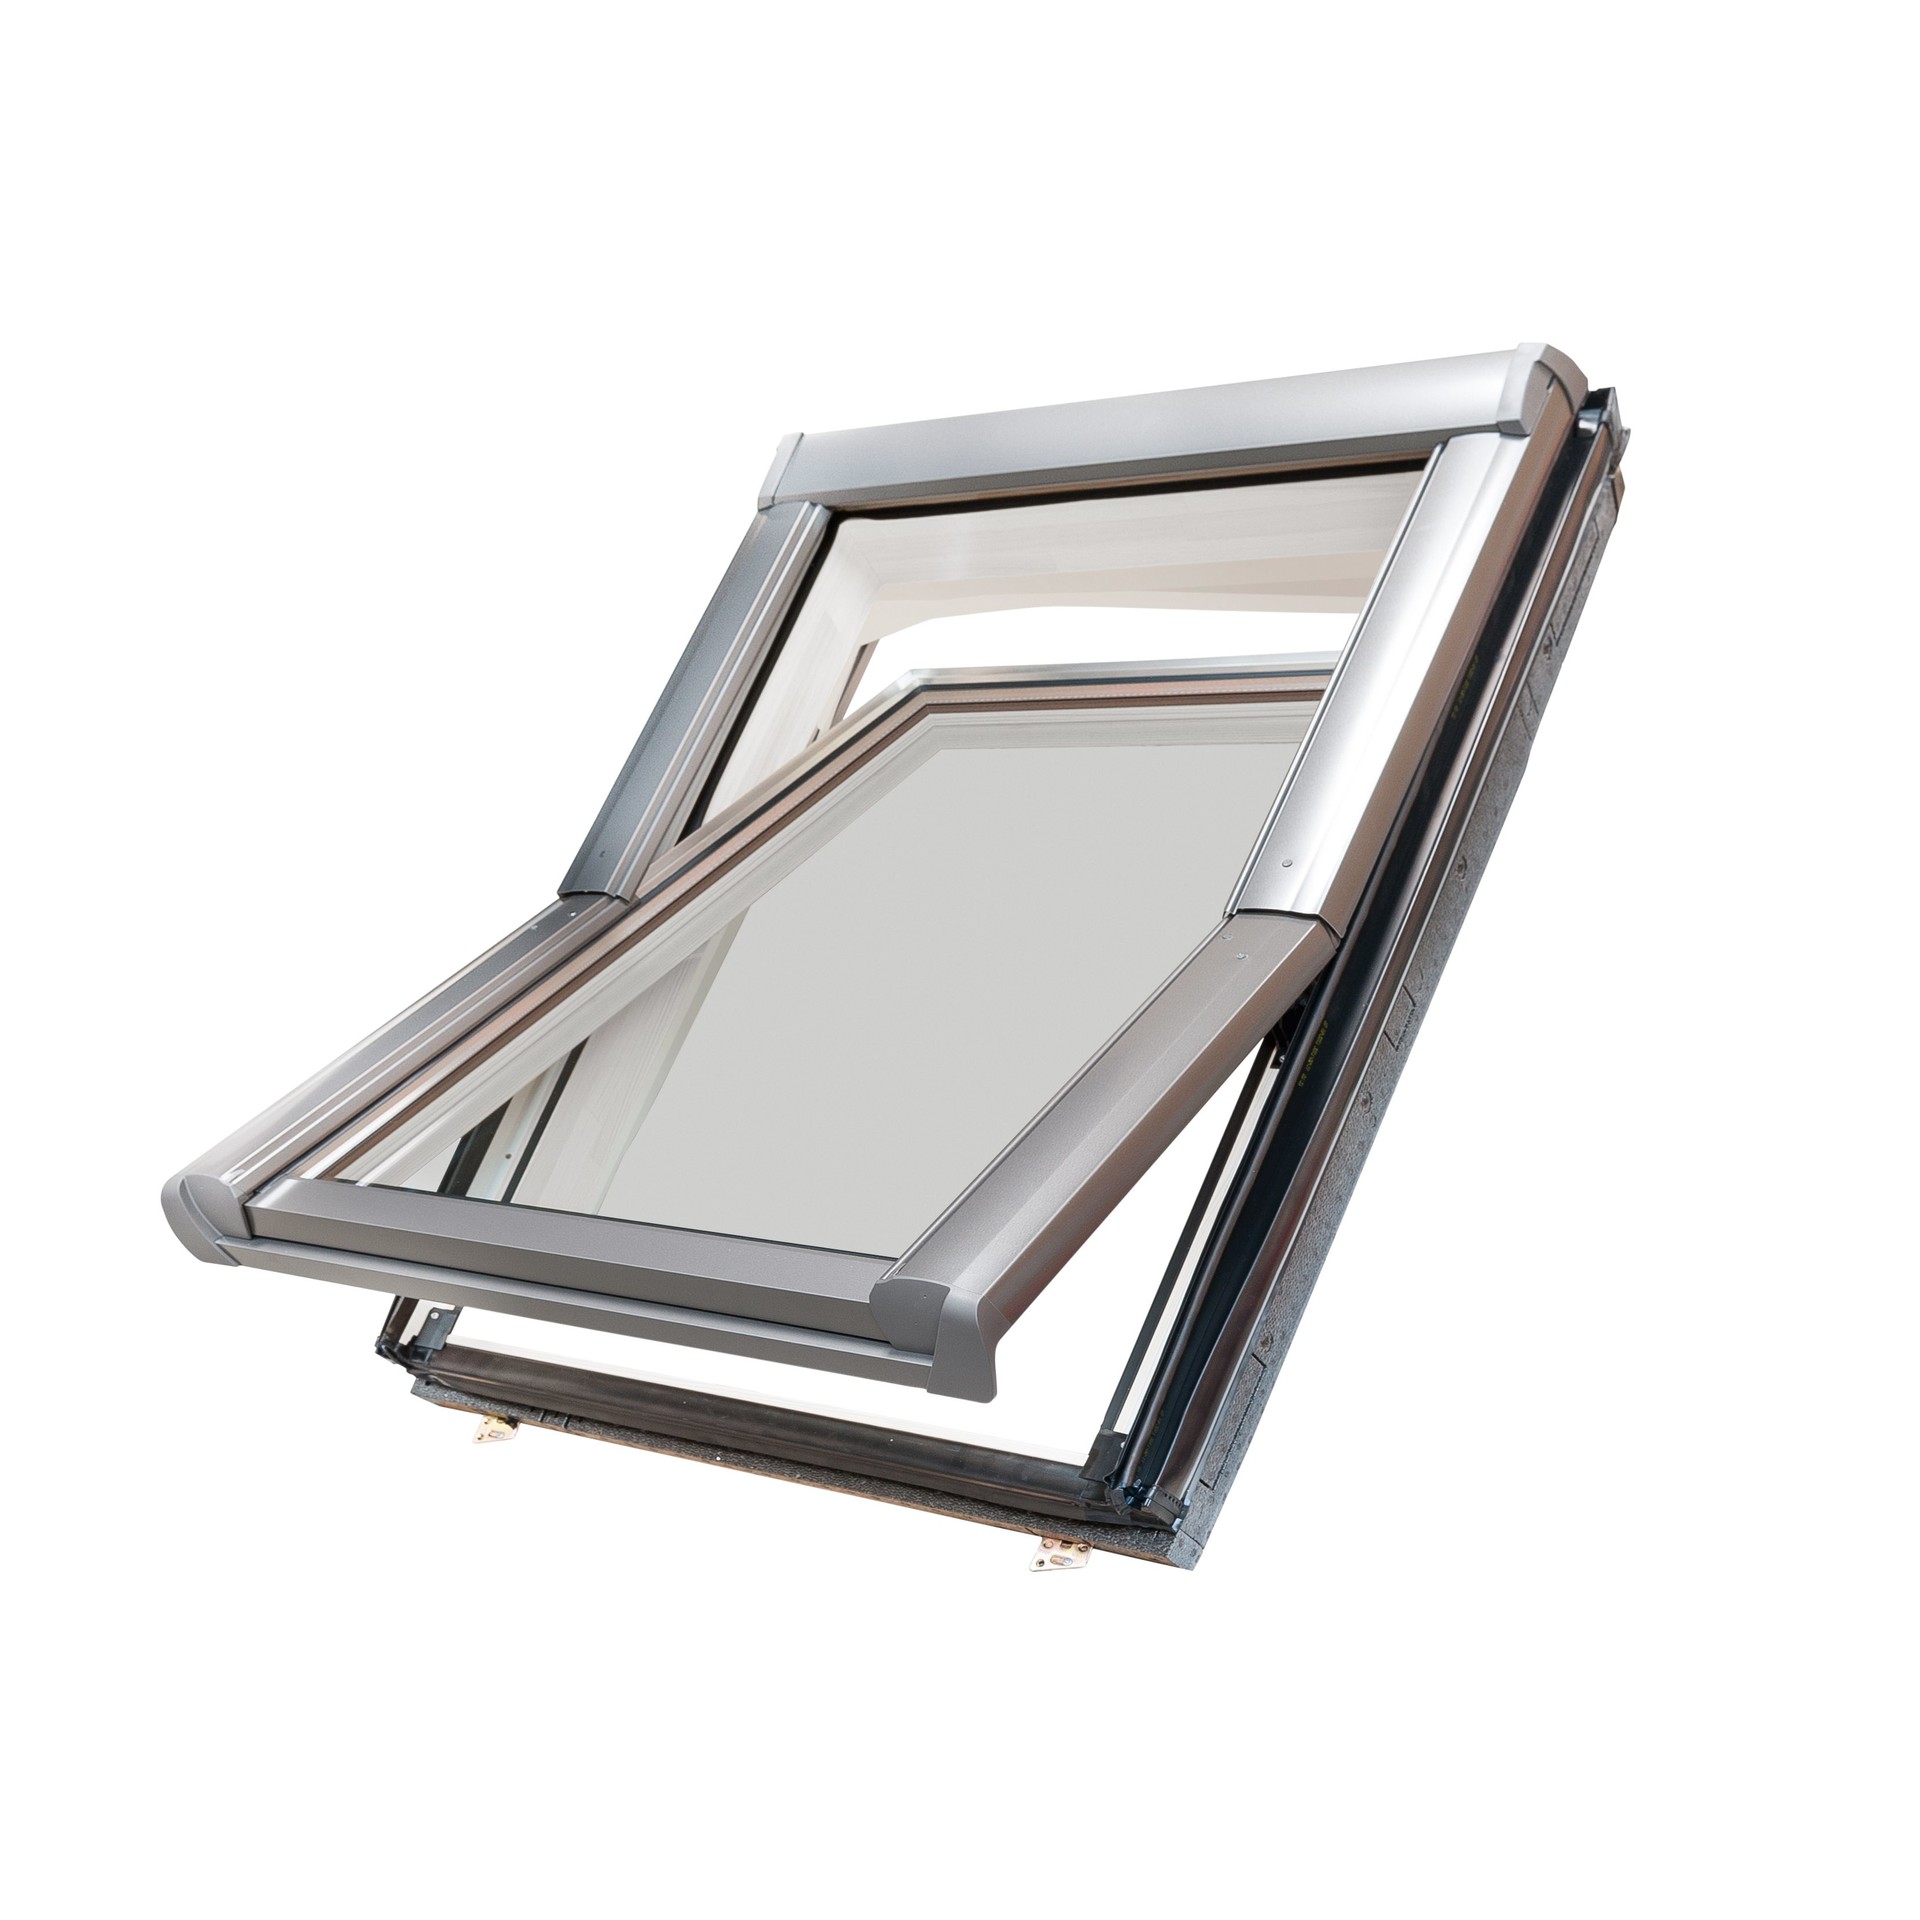 Aluminium LEDlightingroof skylight window